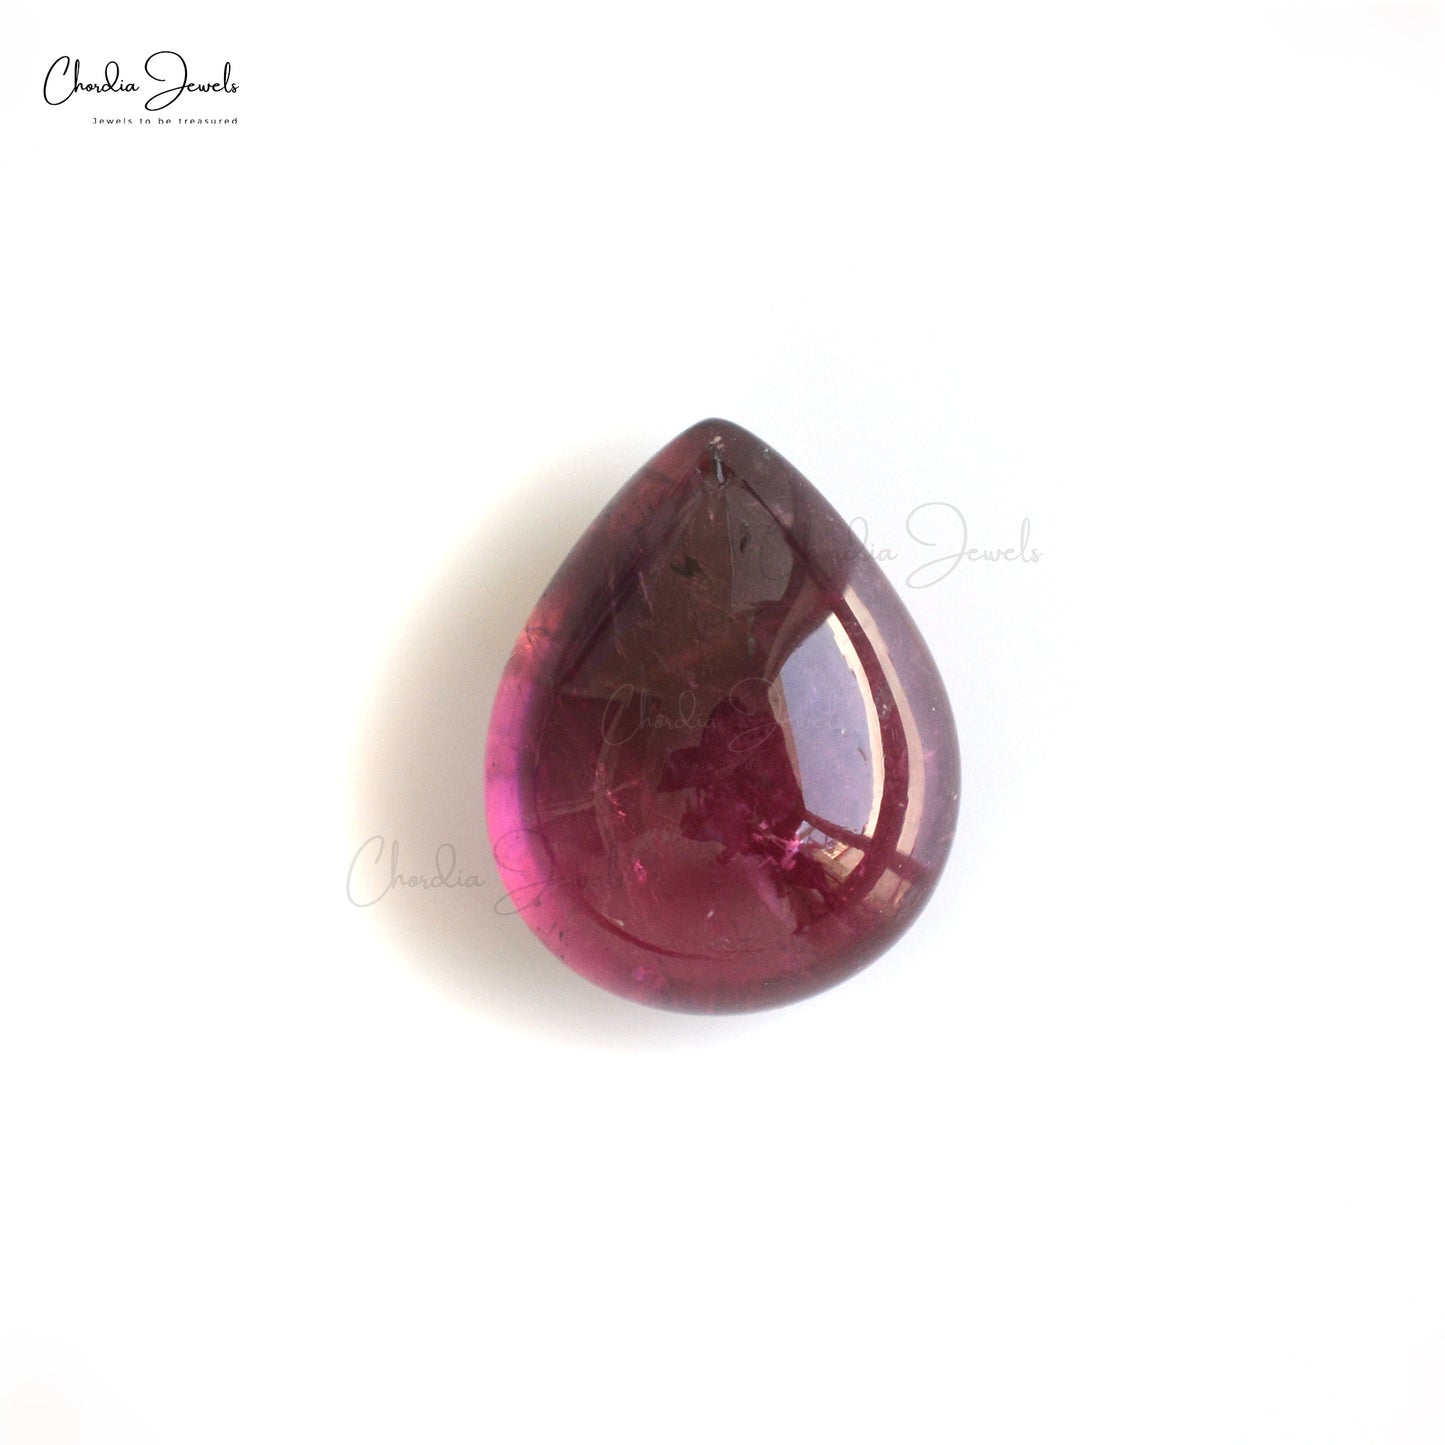 Genuine Pink Tourmaline Pear Cabochon 3.75 Carat Gemstone for Making Jewelry, 1 Piece